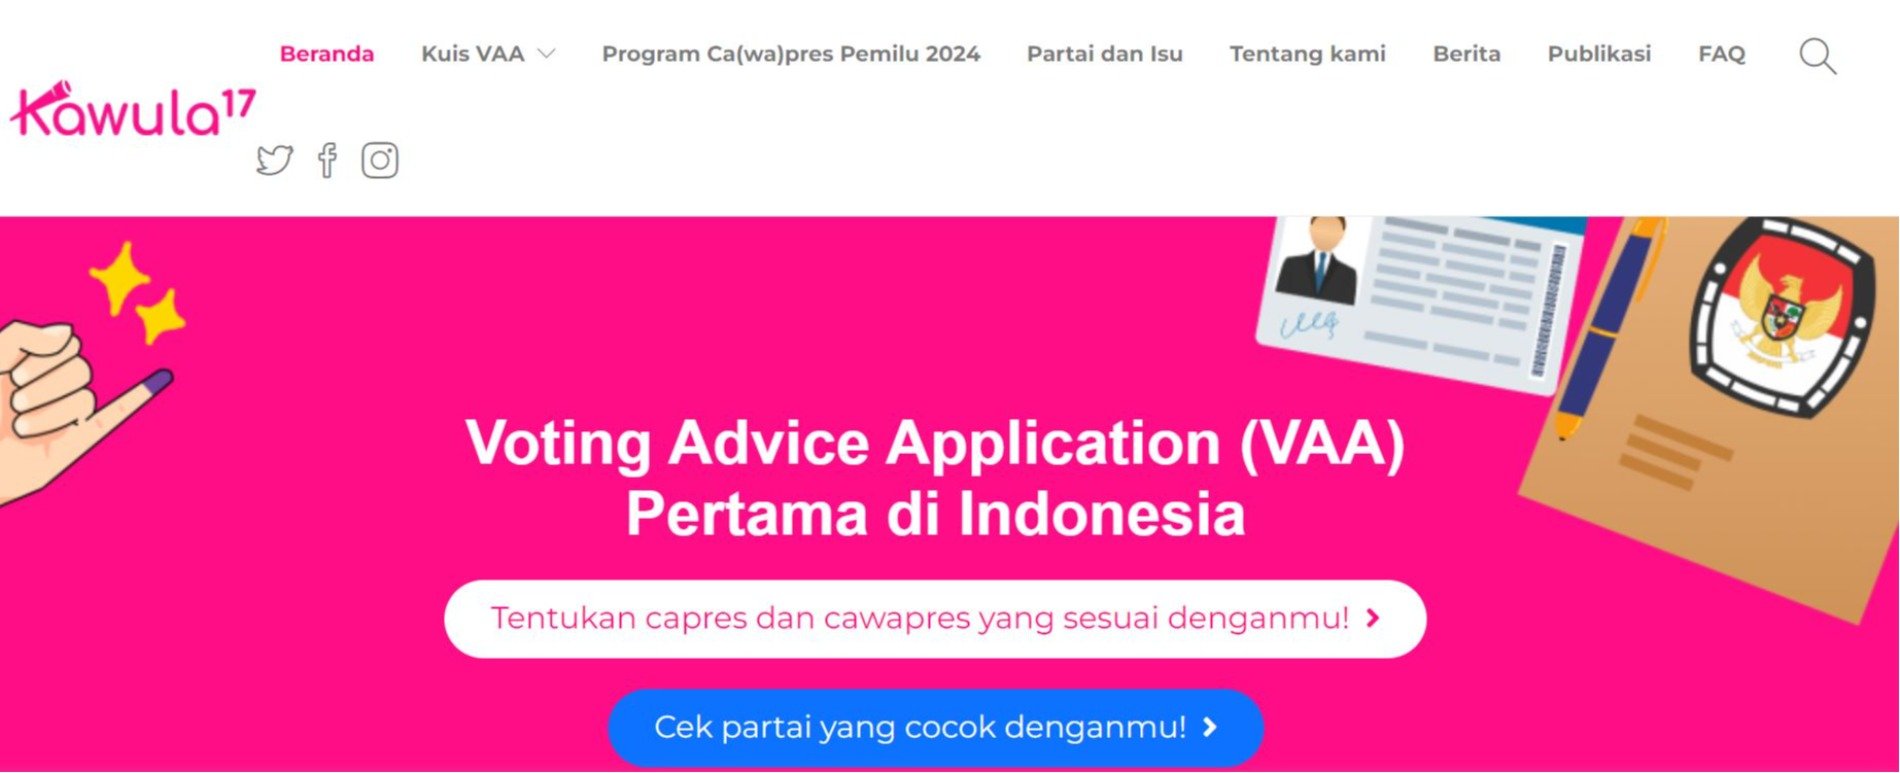 Voting Advice Application (VAA) Kawula17 (Sumber gambar: Kawula17)